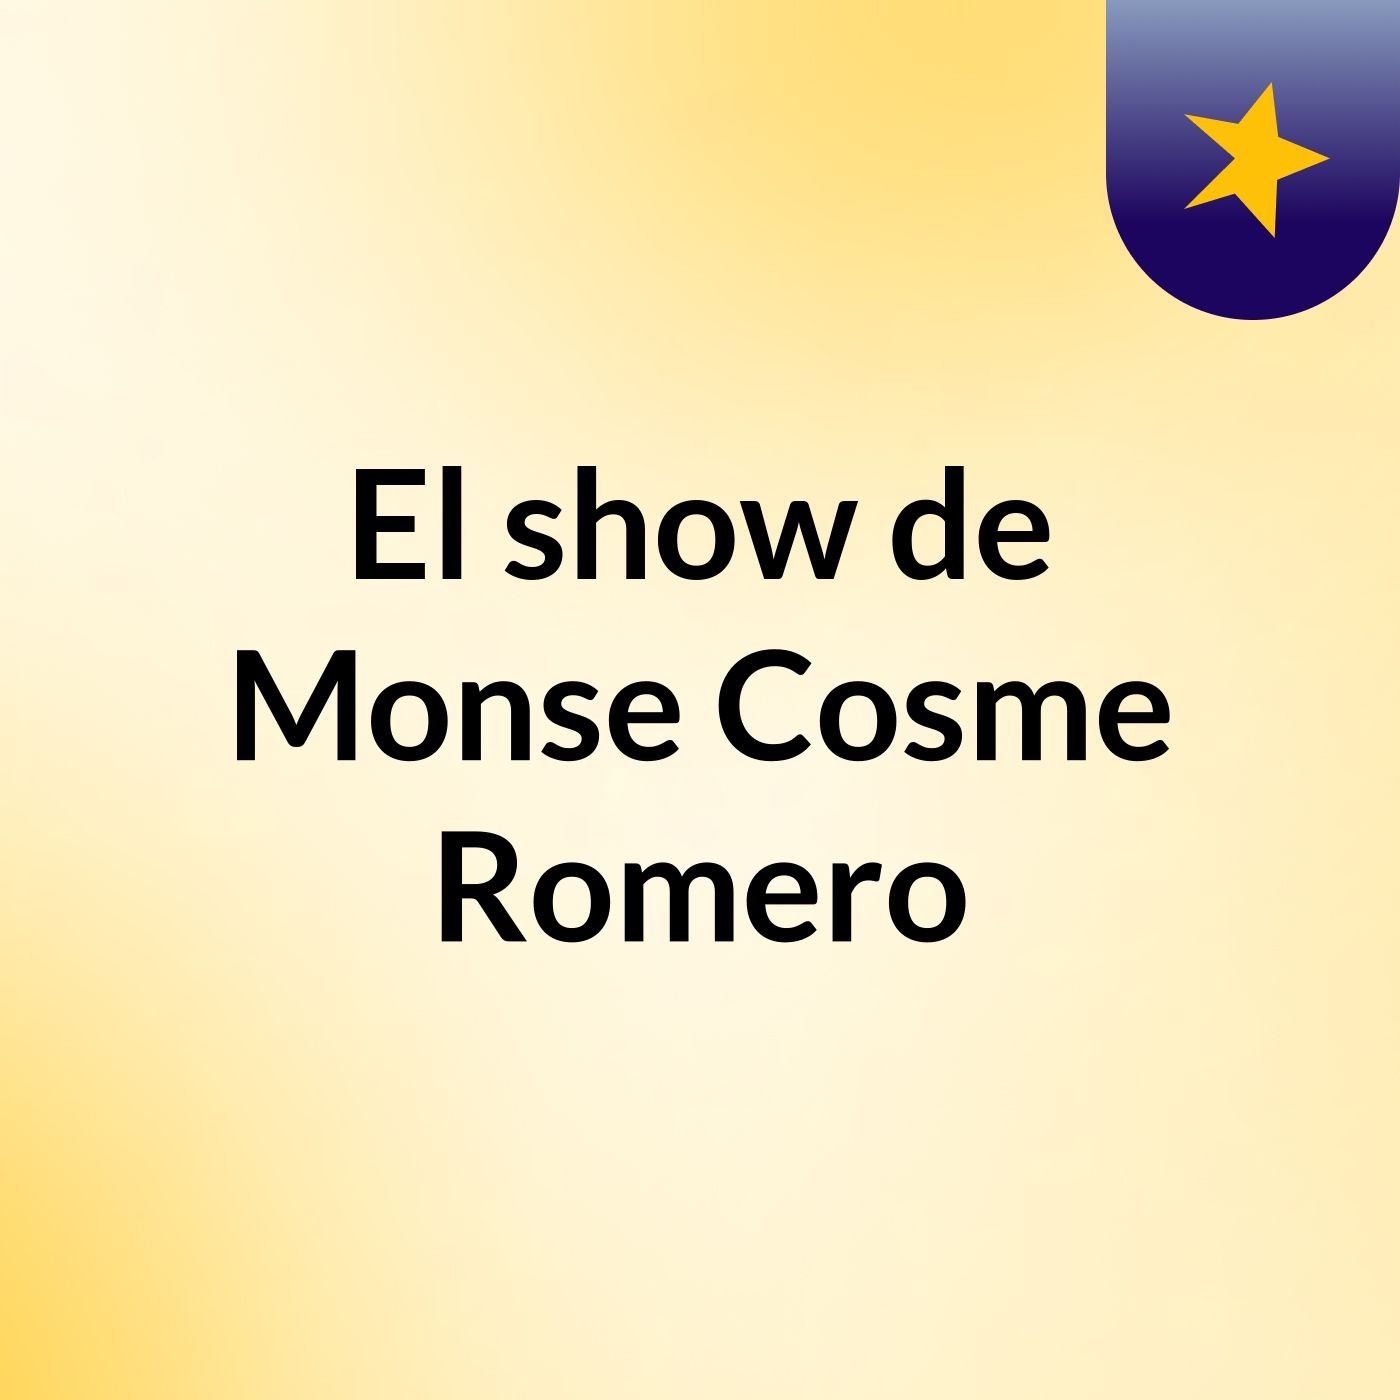 El show de Monse Cosme Romero